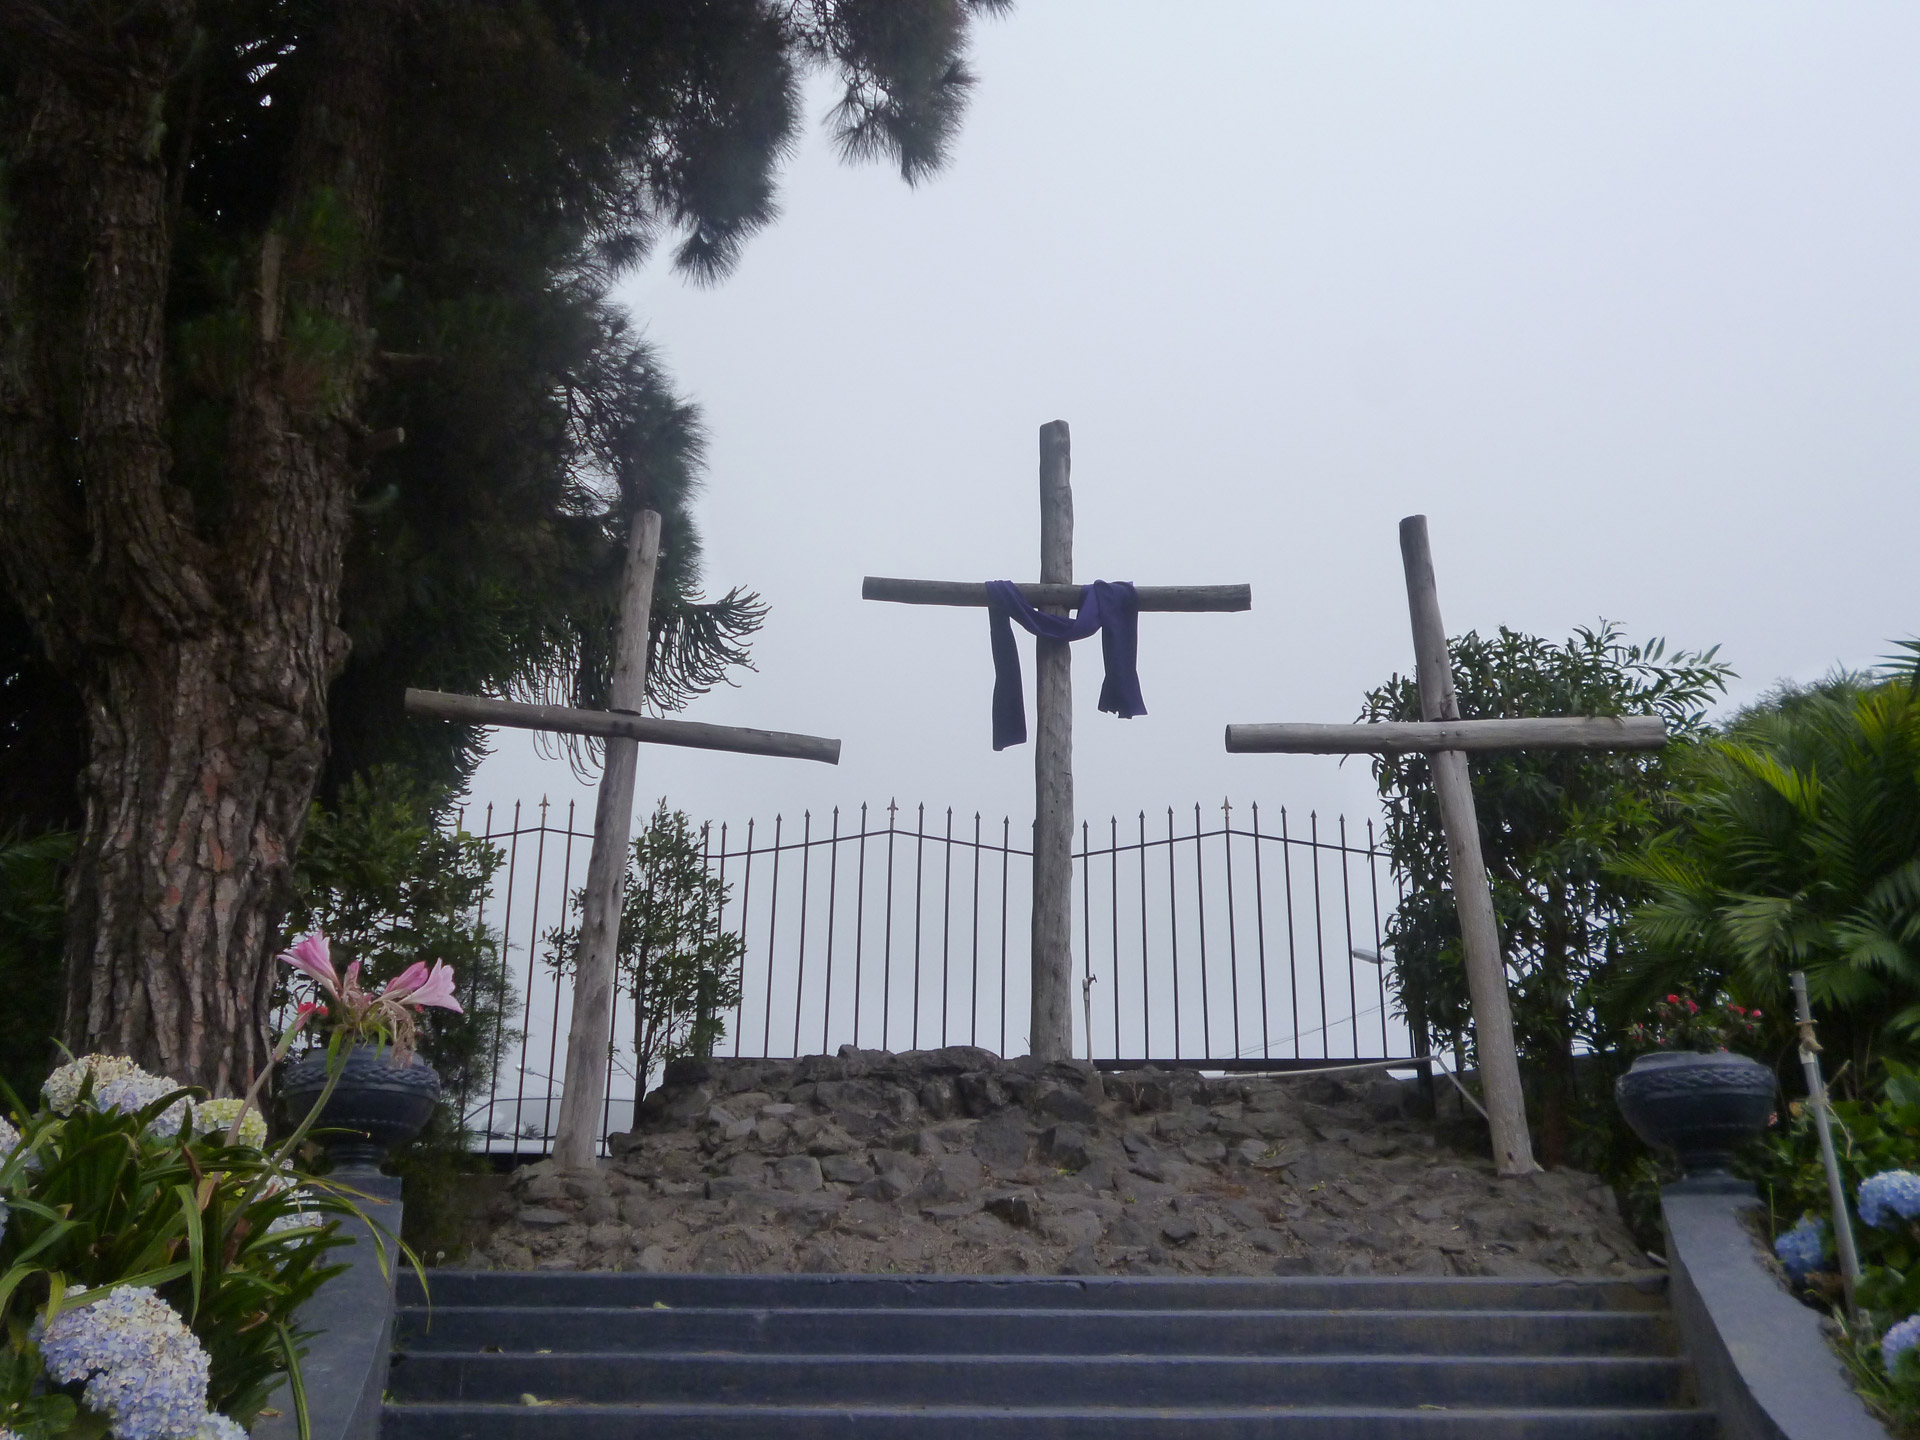 Three Crosses On A Hill